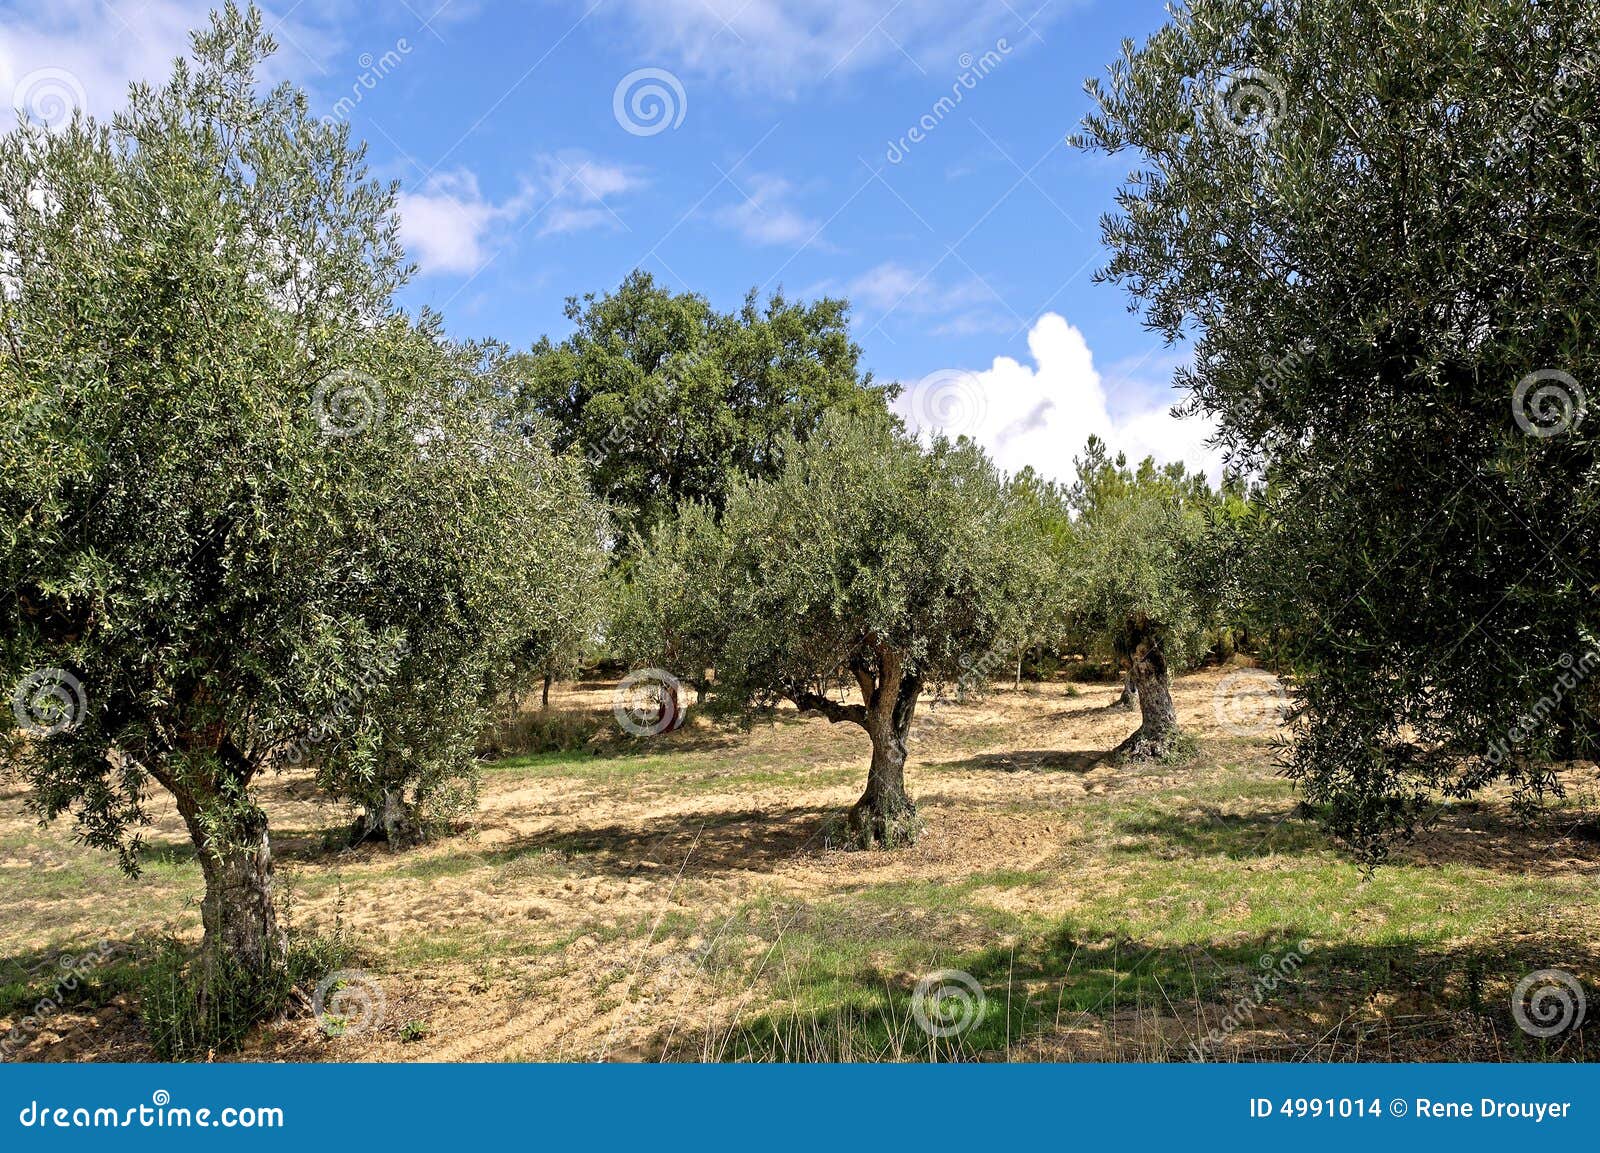 portugal, alentejo: olive tree